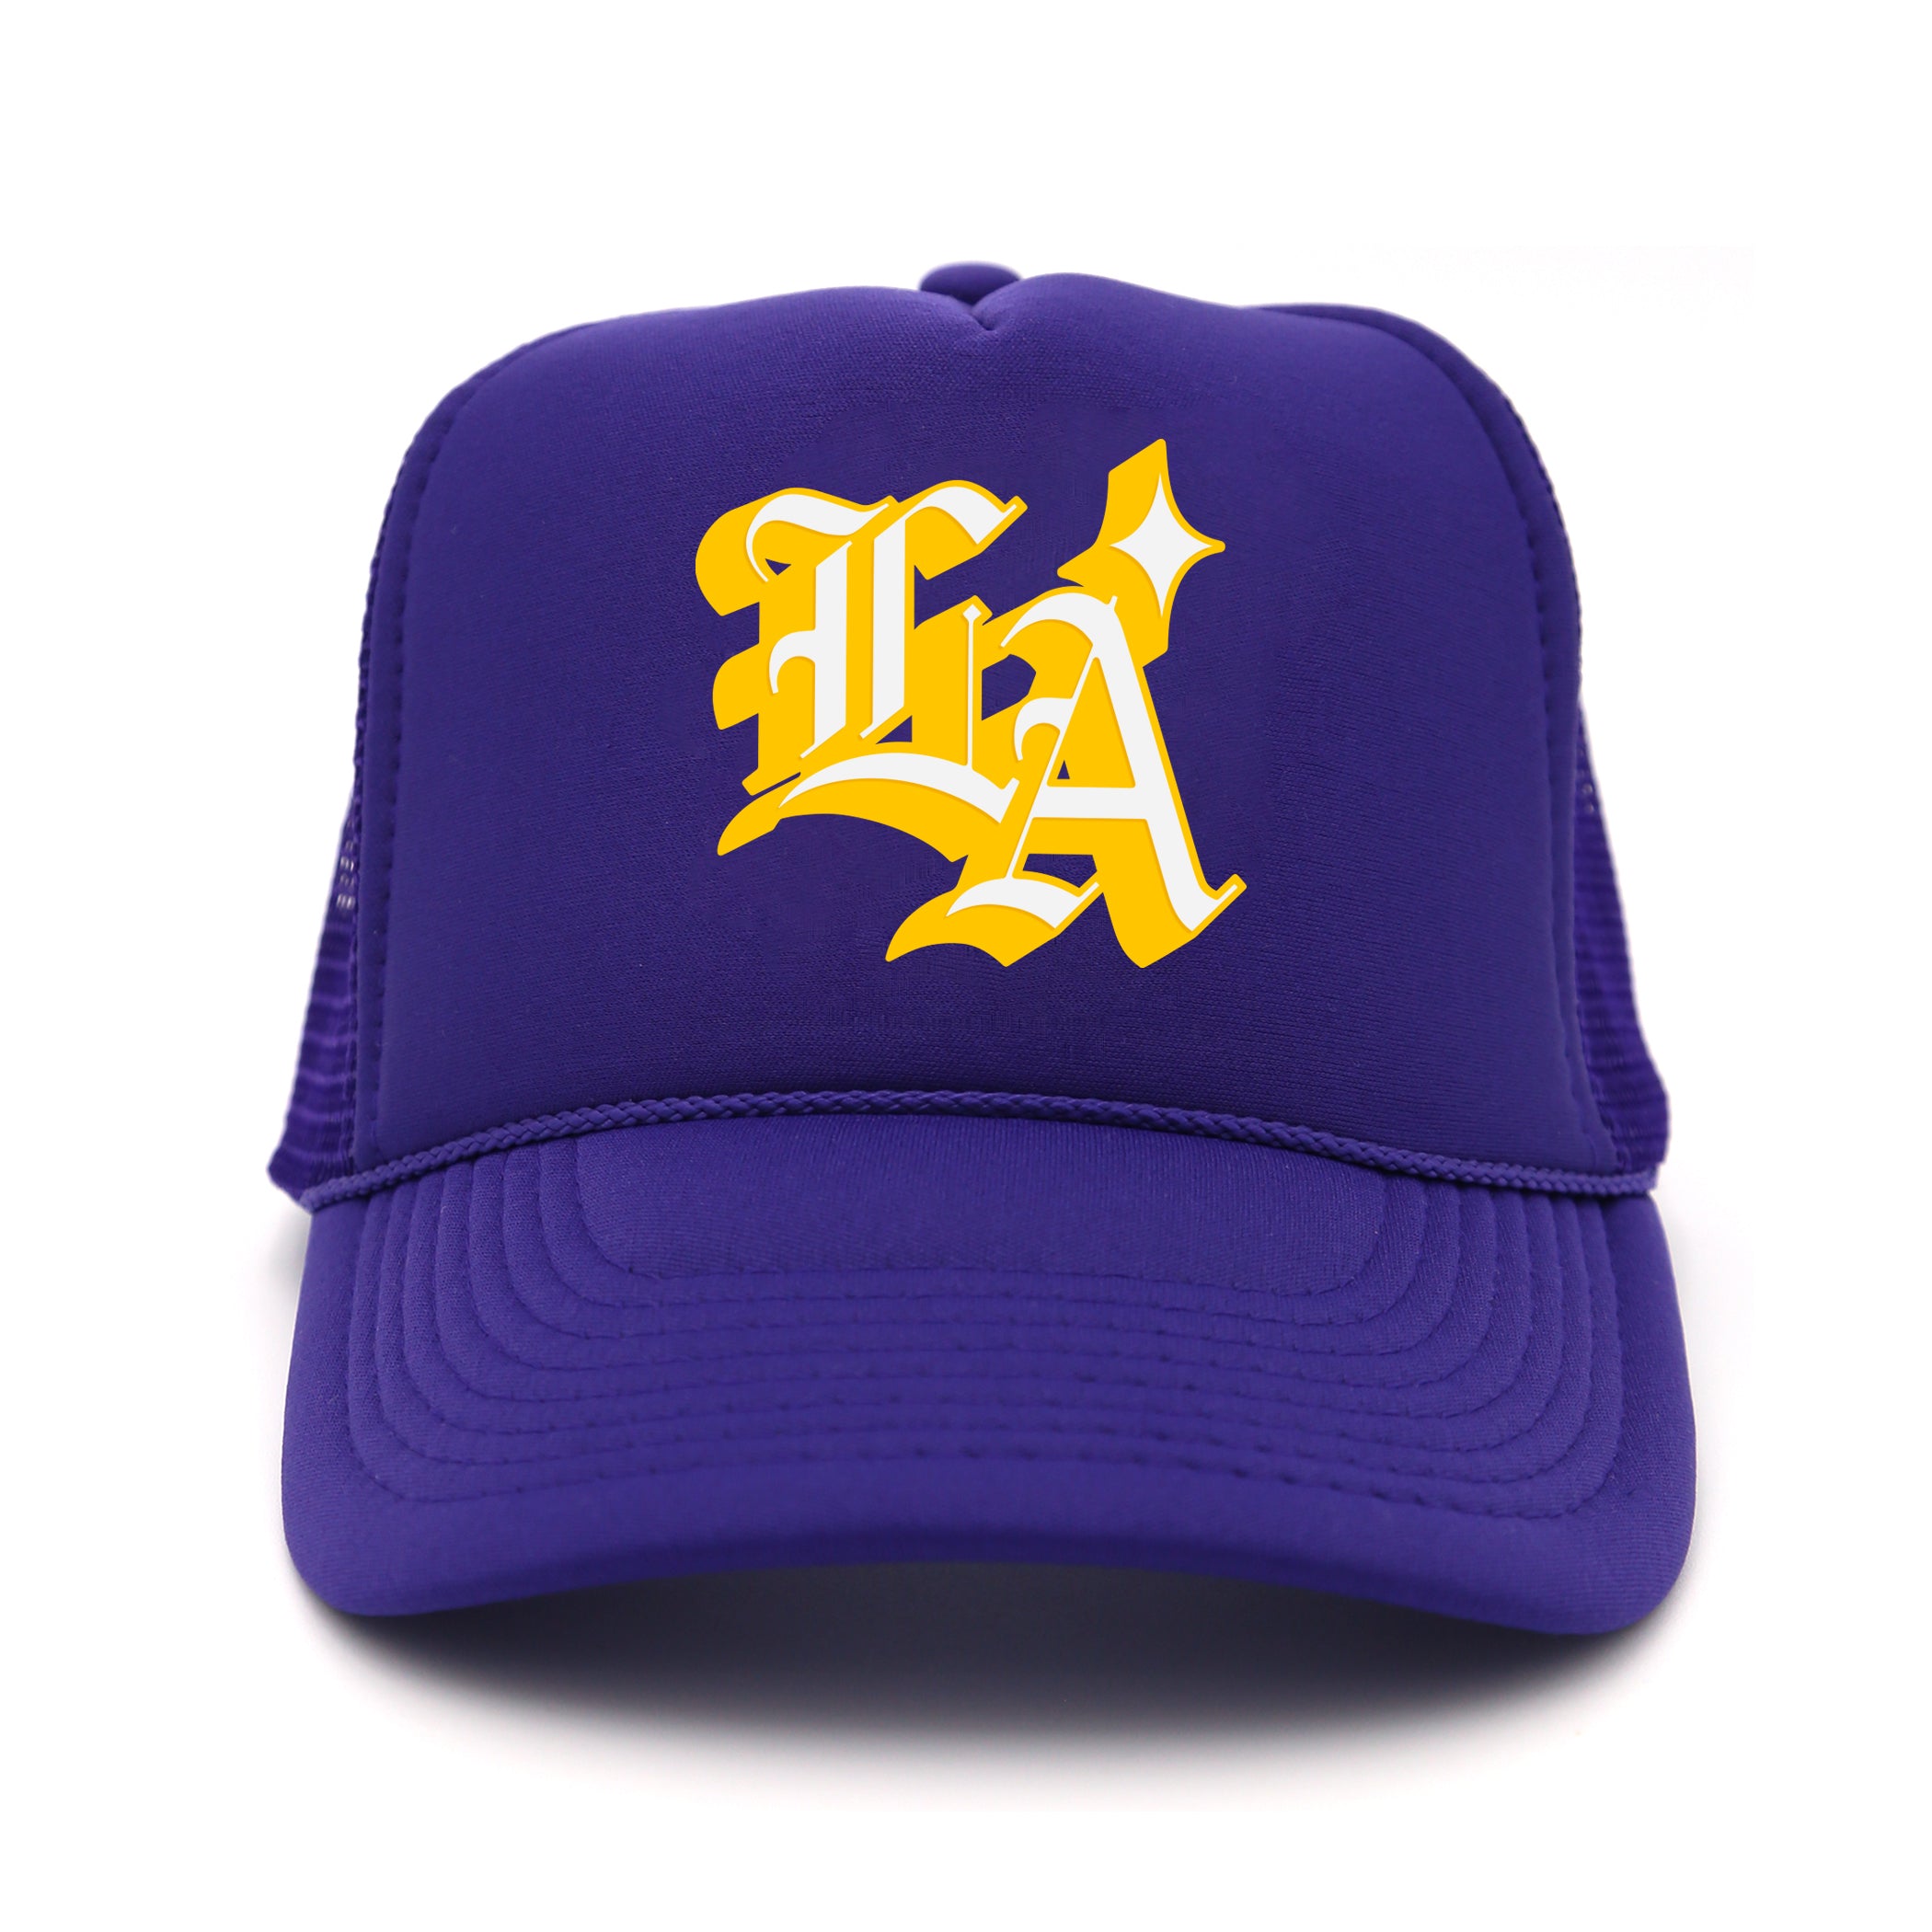 purple la hat